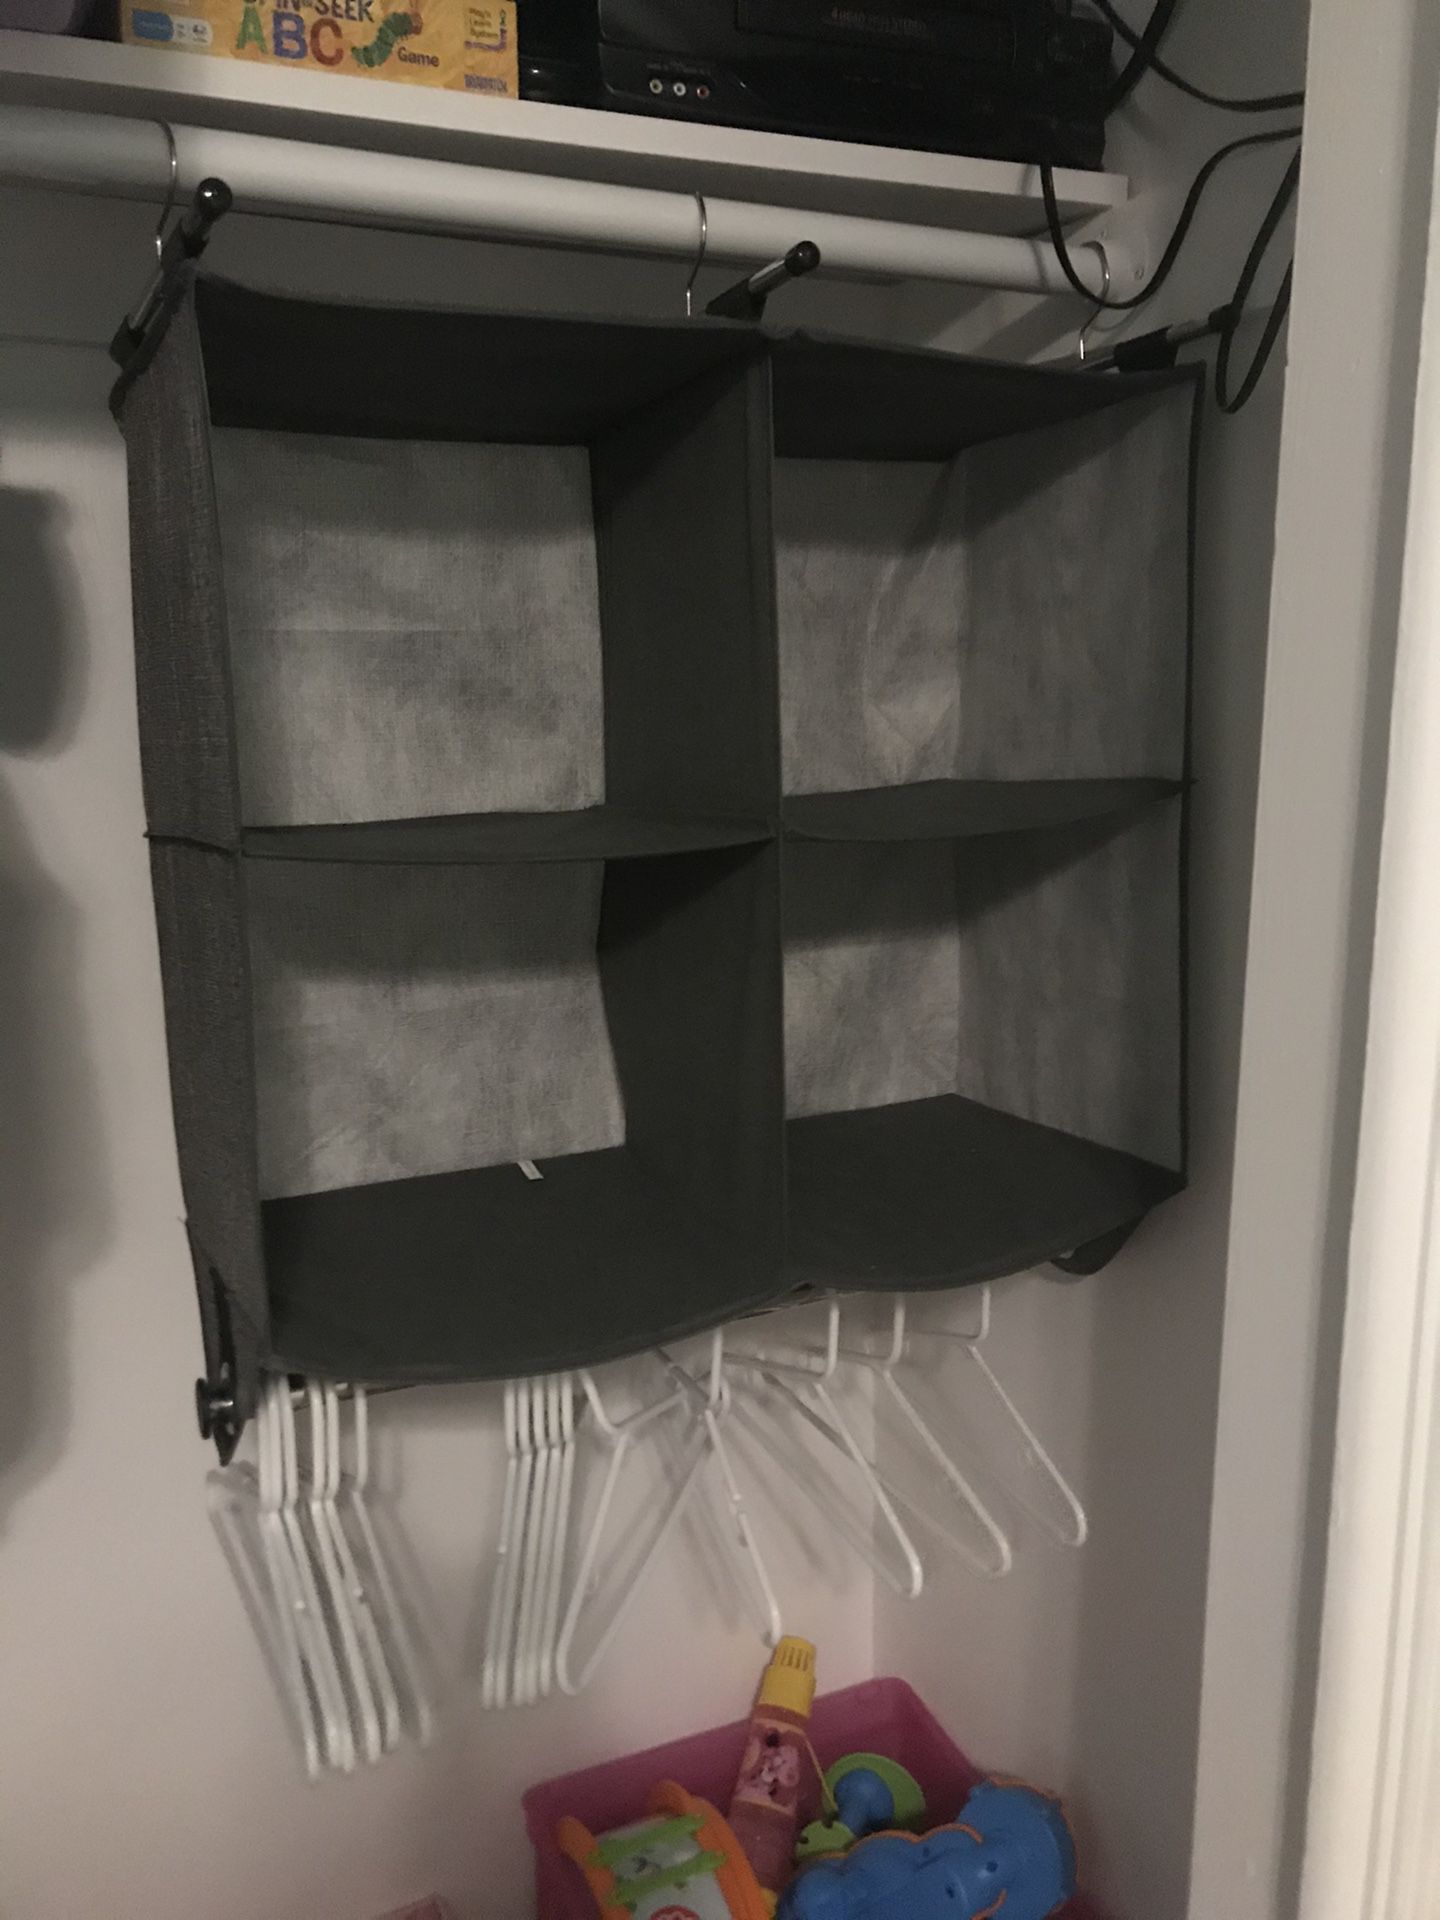 Closet organizer with rod on bottom